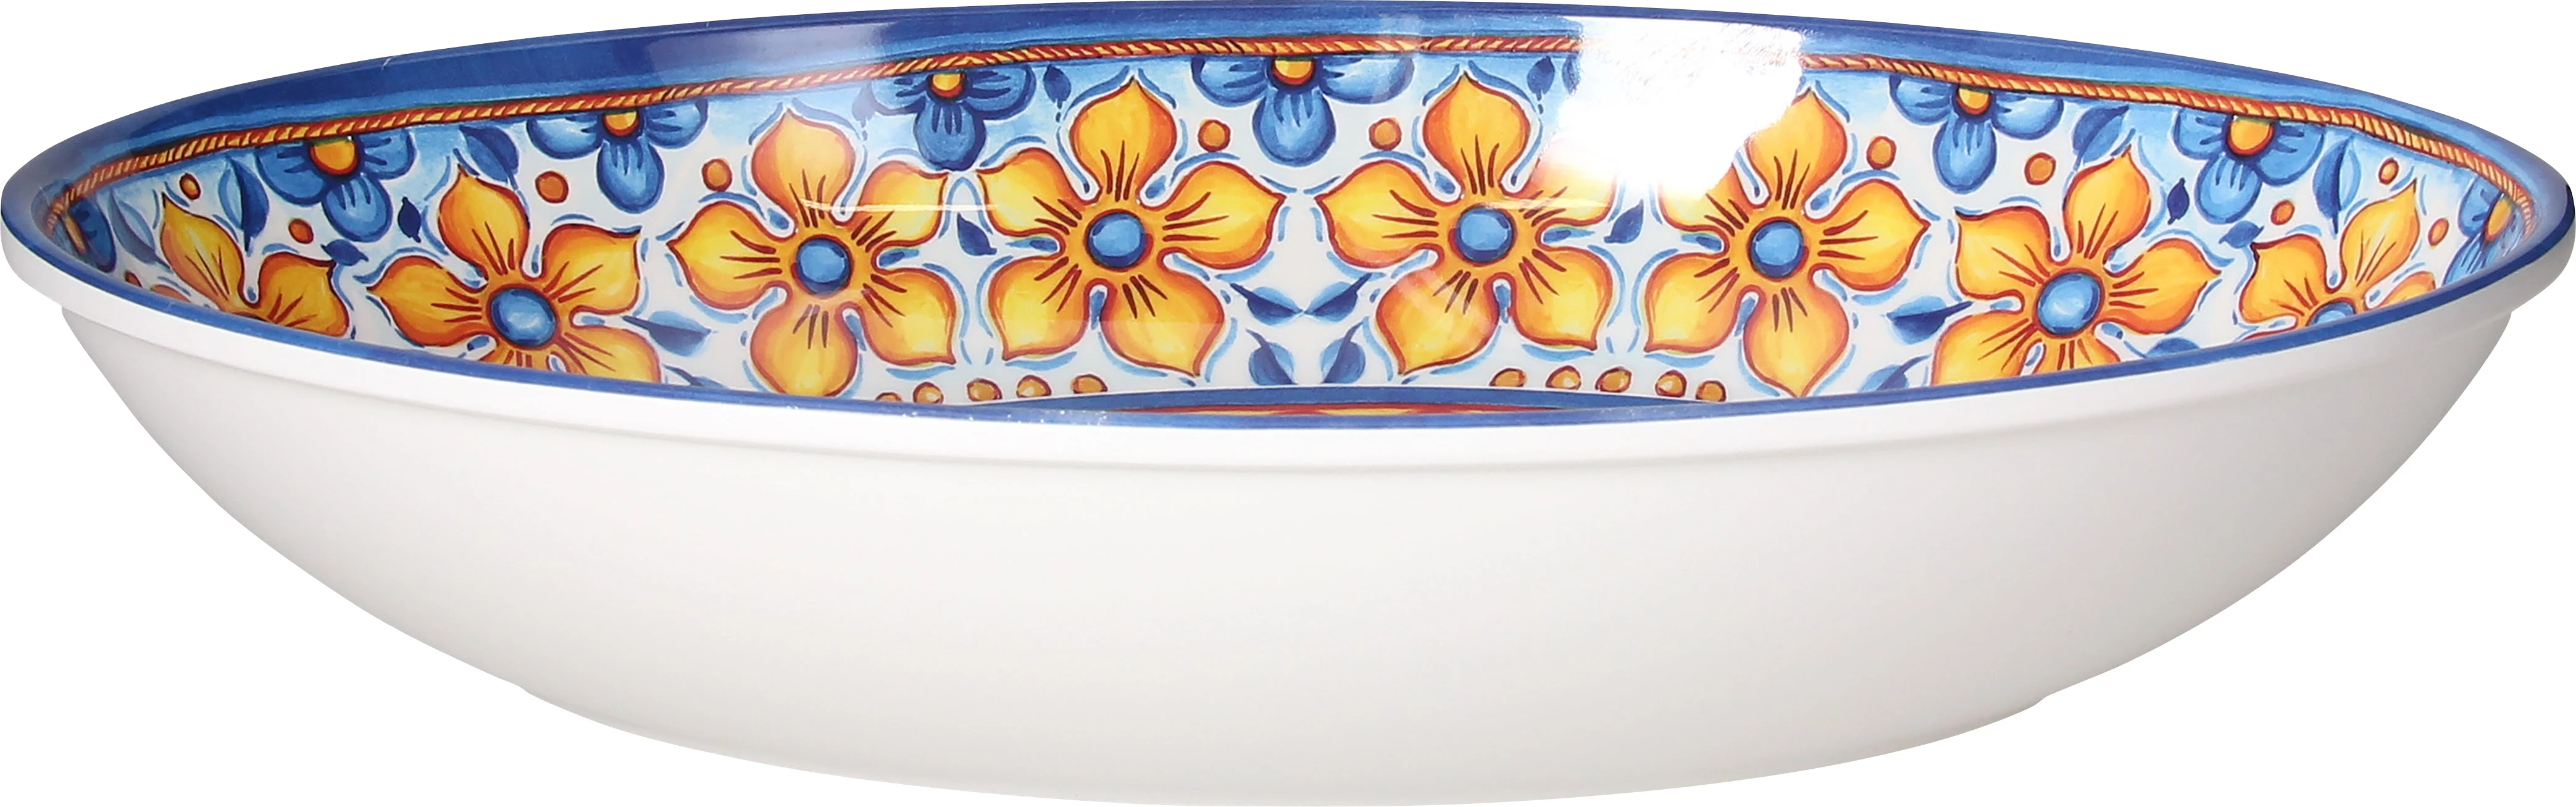 Tognana Narciso Cefalu skål, oval, blå/orange, 220 cl, 34 x 23 cm